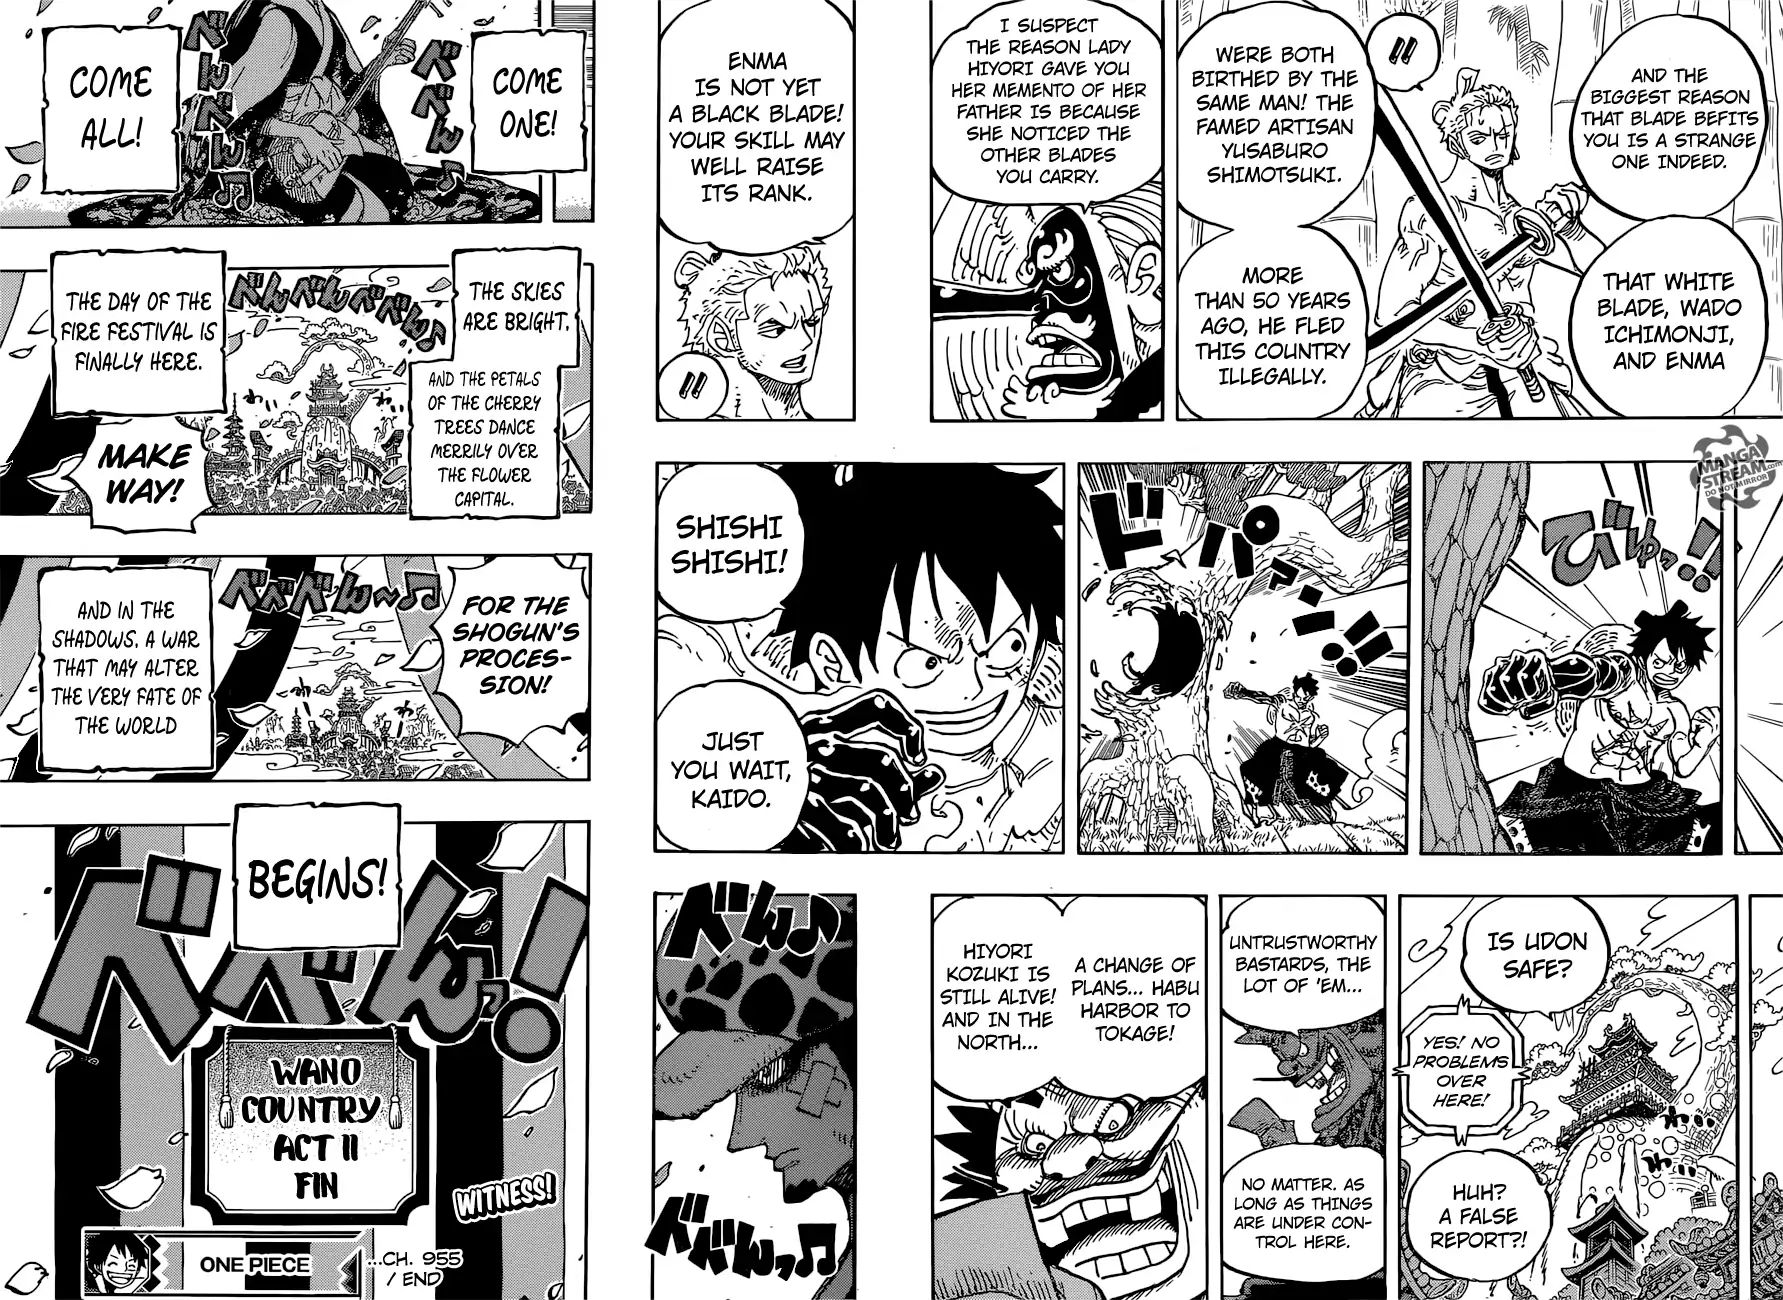 One Piece Chapter 955 Enma Read Free Yaoi Yaoi Manga Yaoi Hentai Online